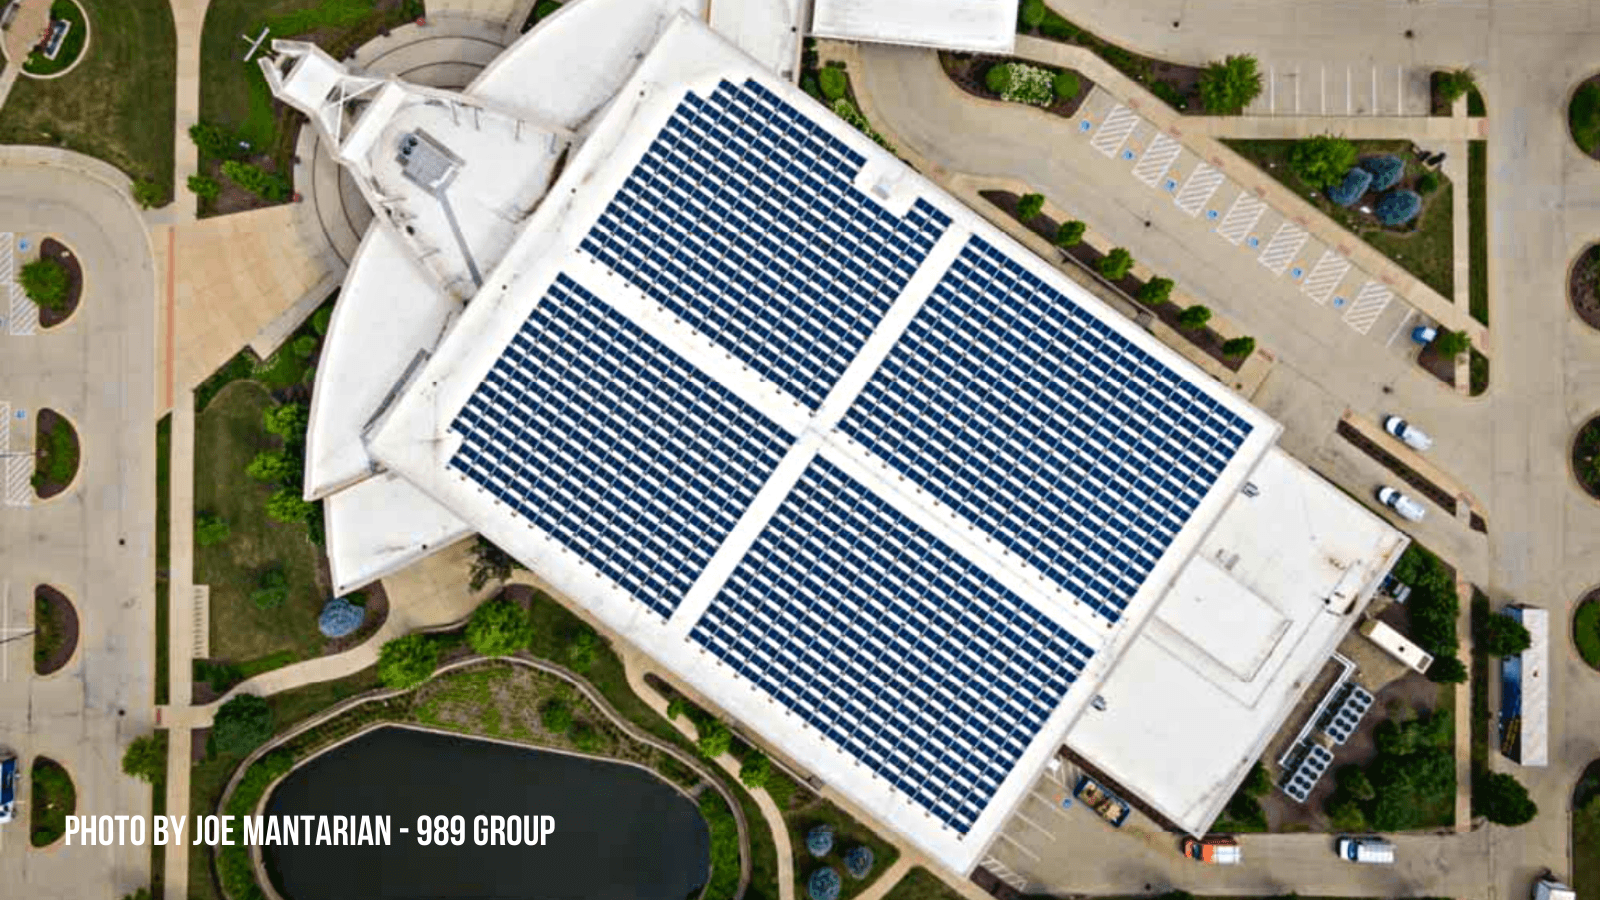 Olivet Kicks off 2022 with Solar Power